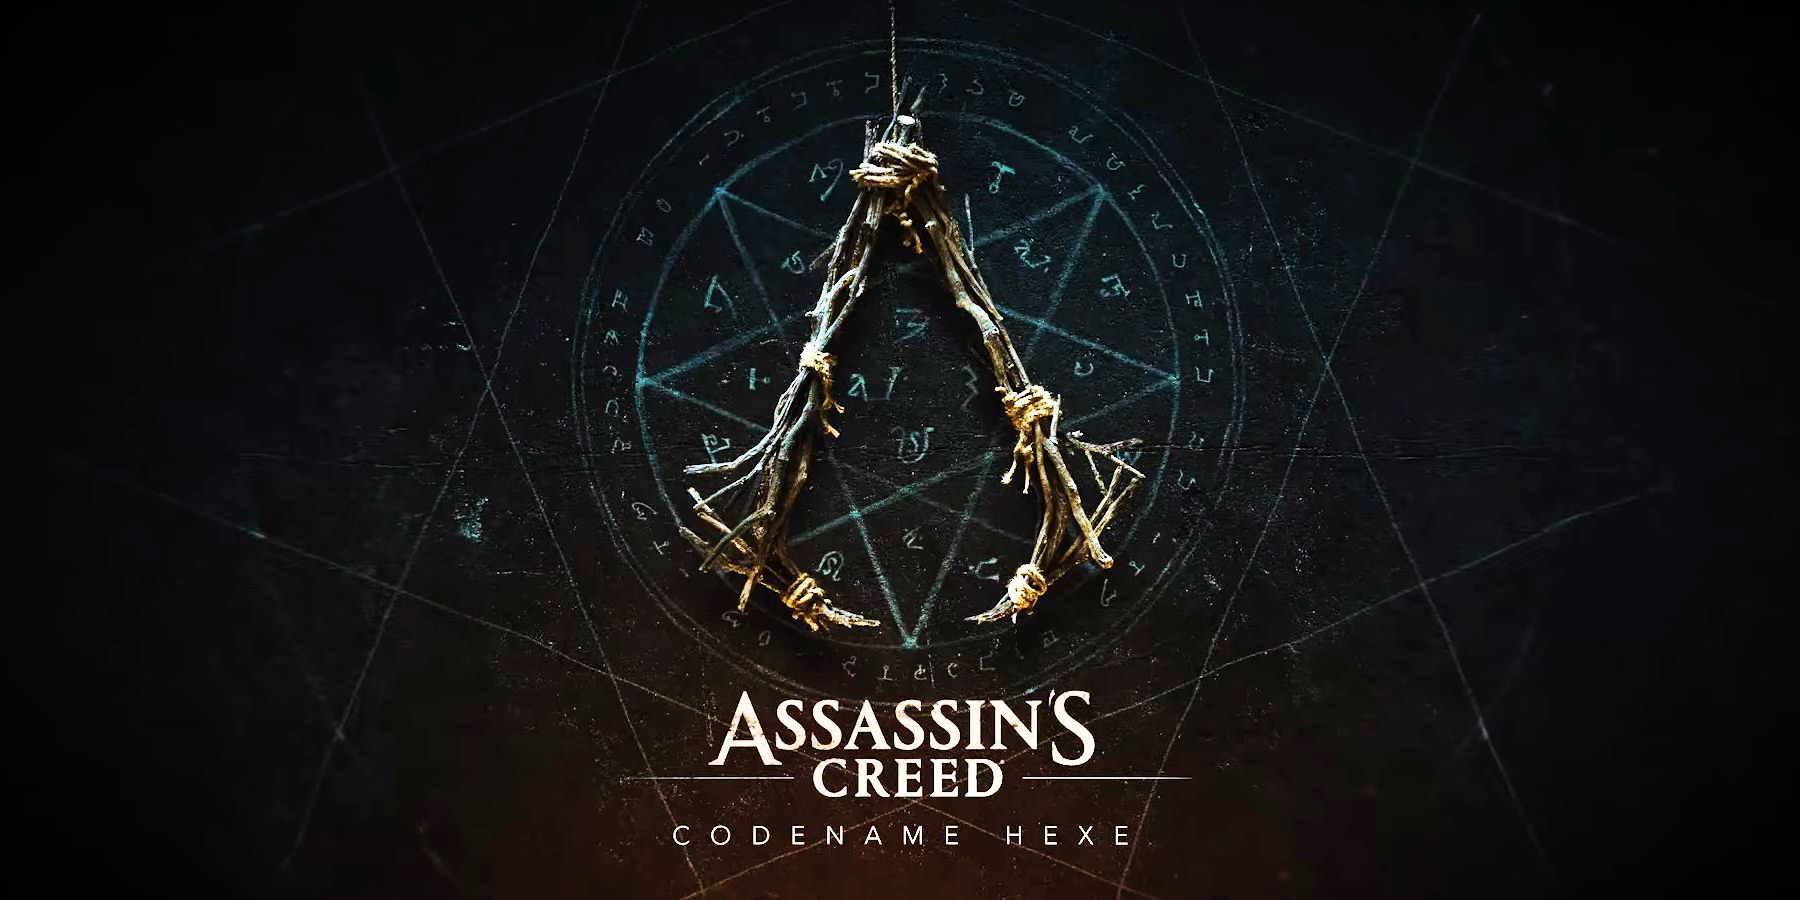 Assassin's Creed Hexe logo showing a summoning circle.